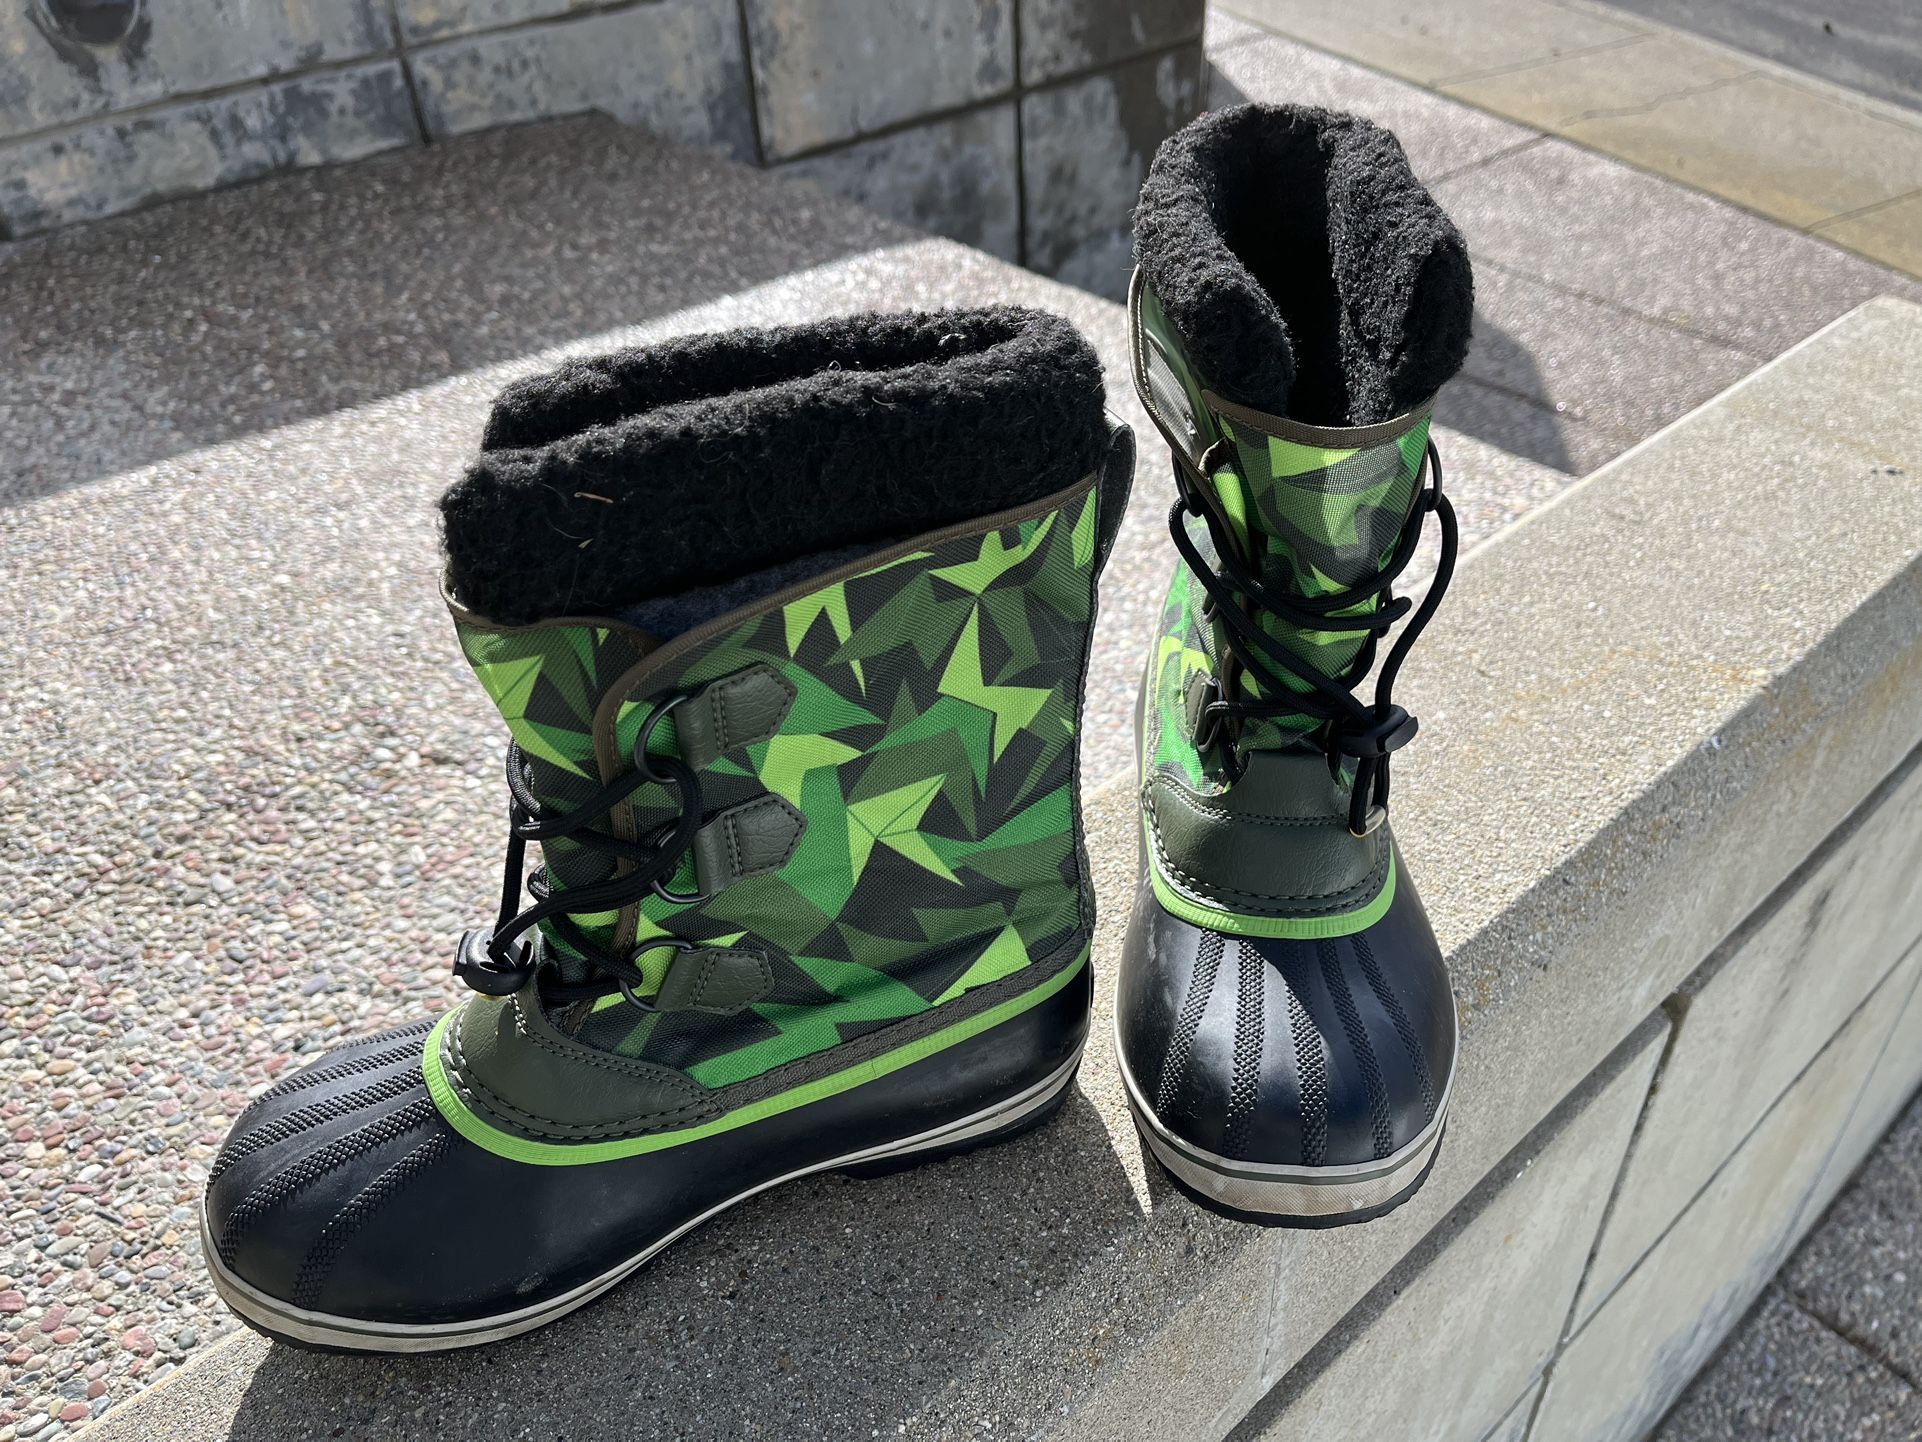 Sorel Snow Boots size 6